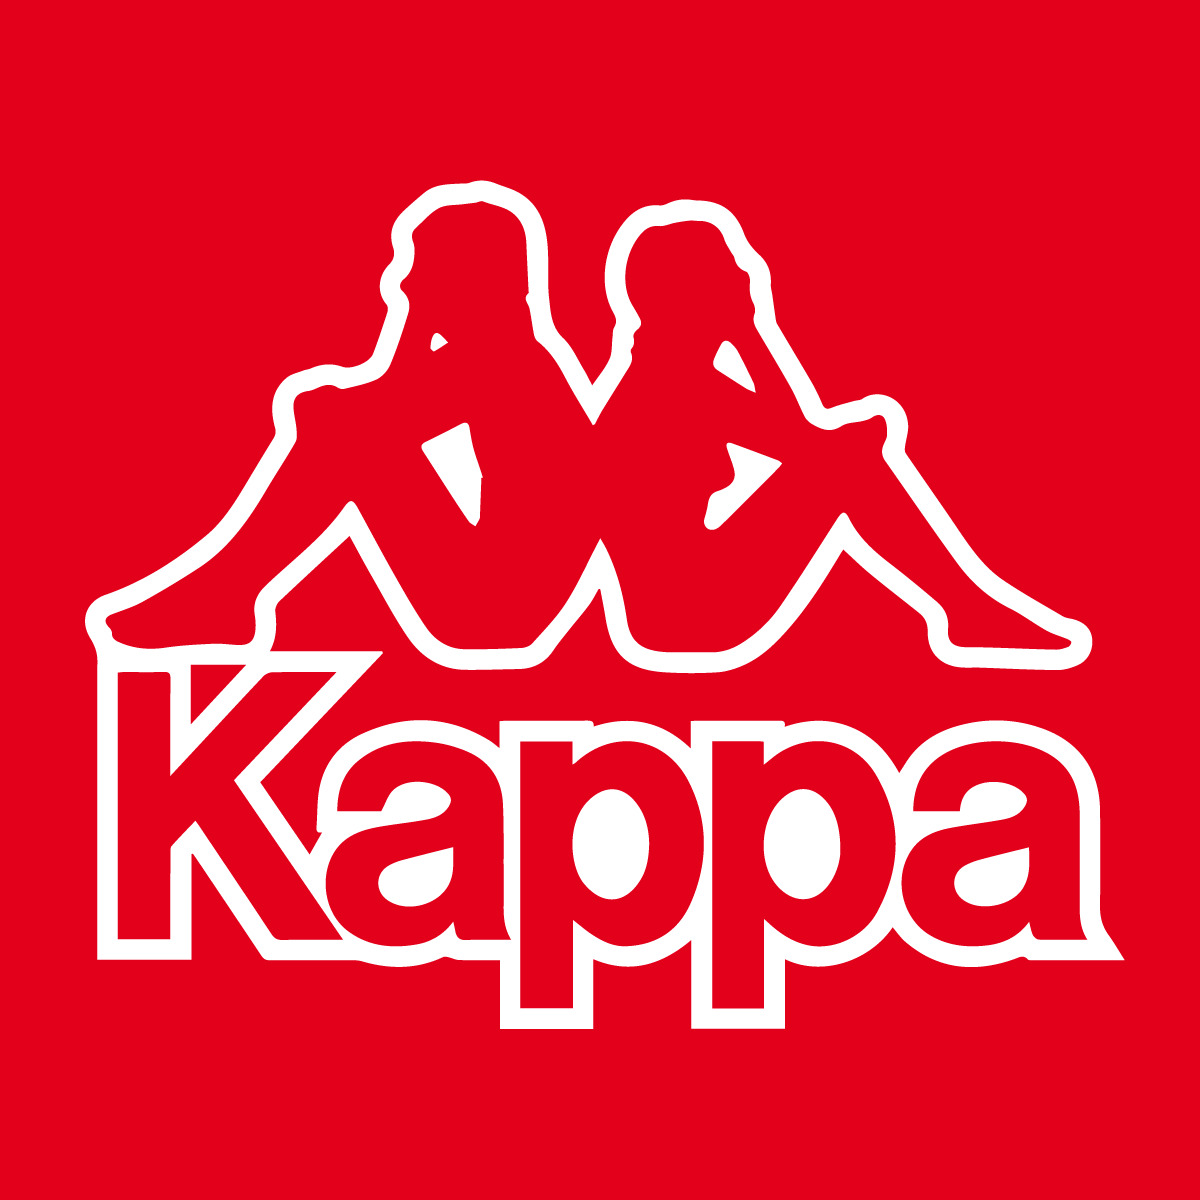 Kappa Logo - Kappa Logo Vector 1994 Red | Free Vector Silhouette Graphics AI EPS ...